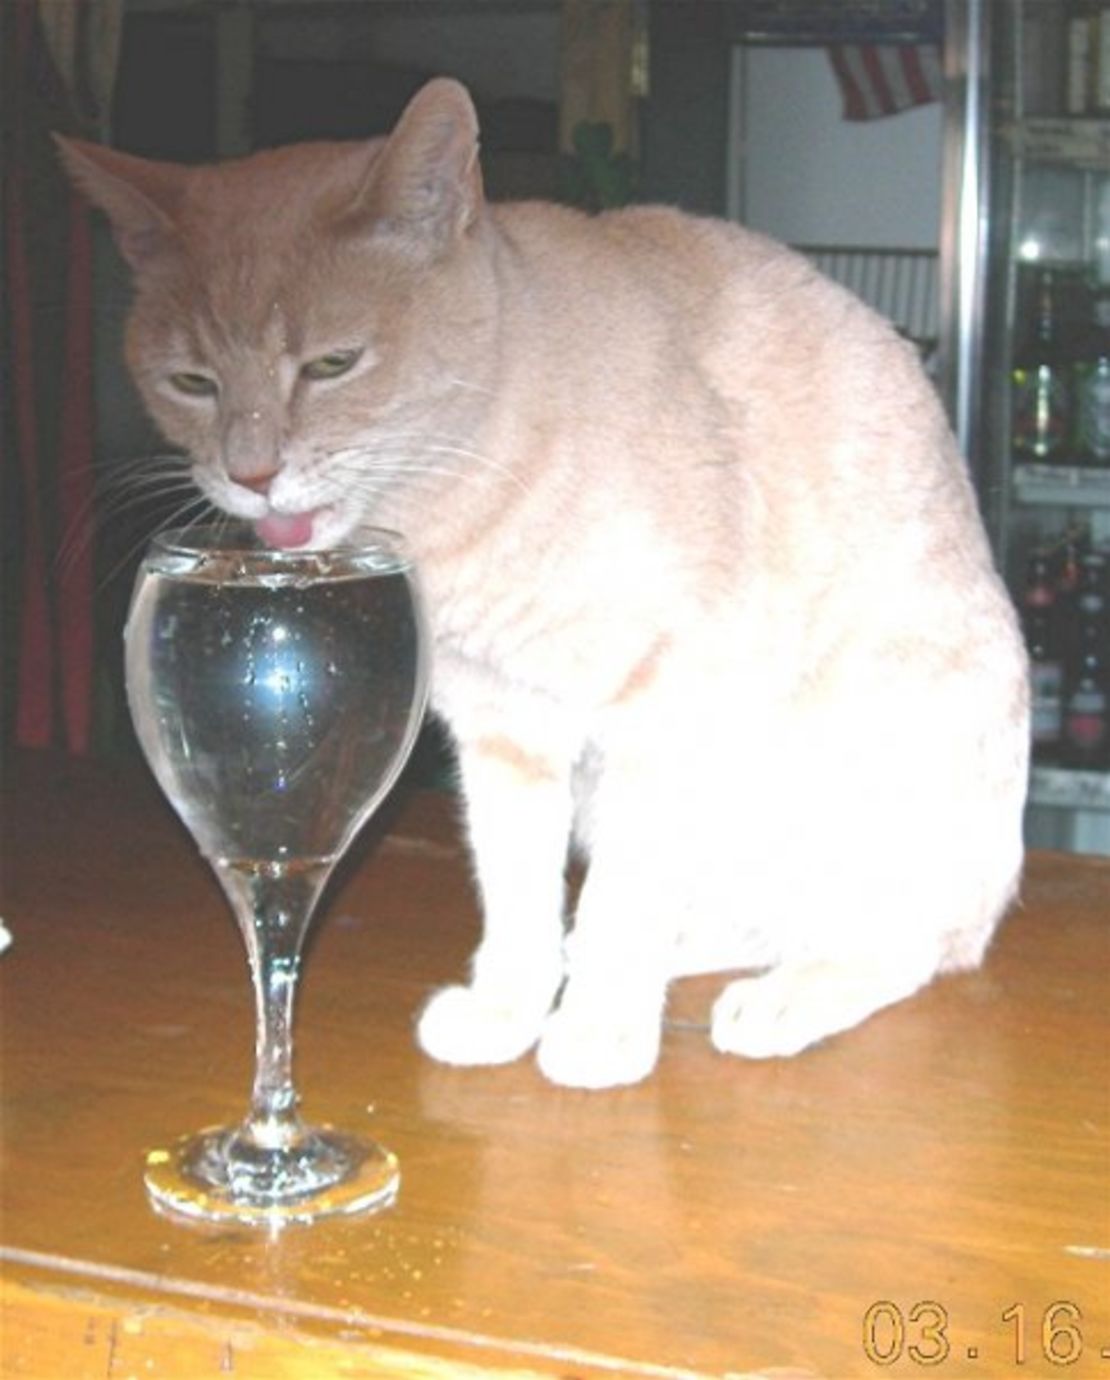 Mayor Stubbs of Talkeetna, Alaska, drinks water with catnip from a wine glass.